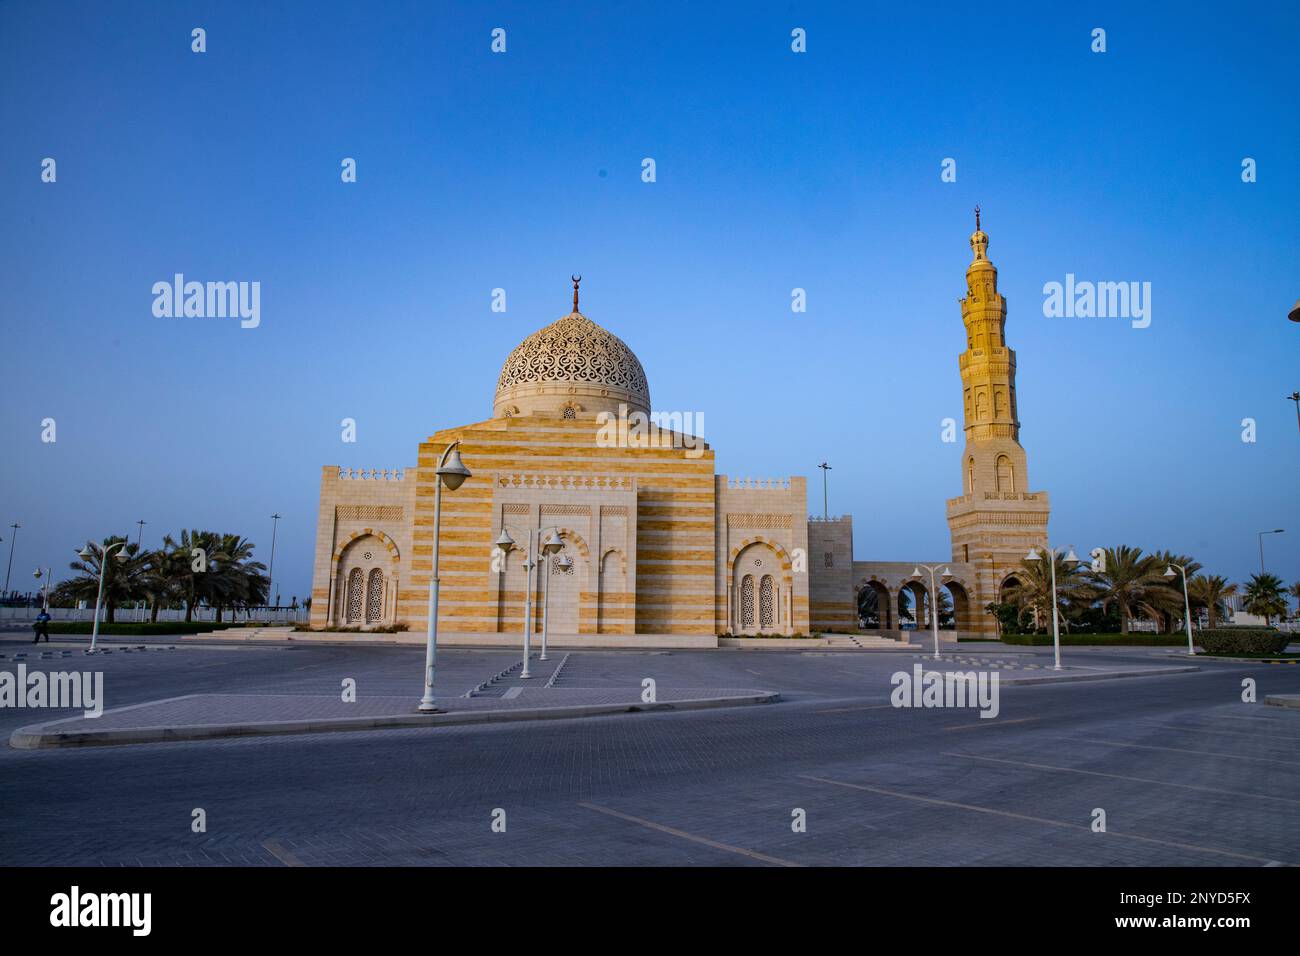 Shaikh Isa Bin Salman Al Khalifa Grand Mosque, Kingdom of Bahrain, Middle East. Stock Photo